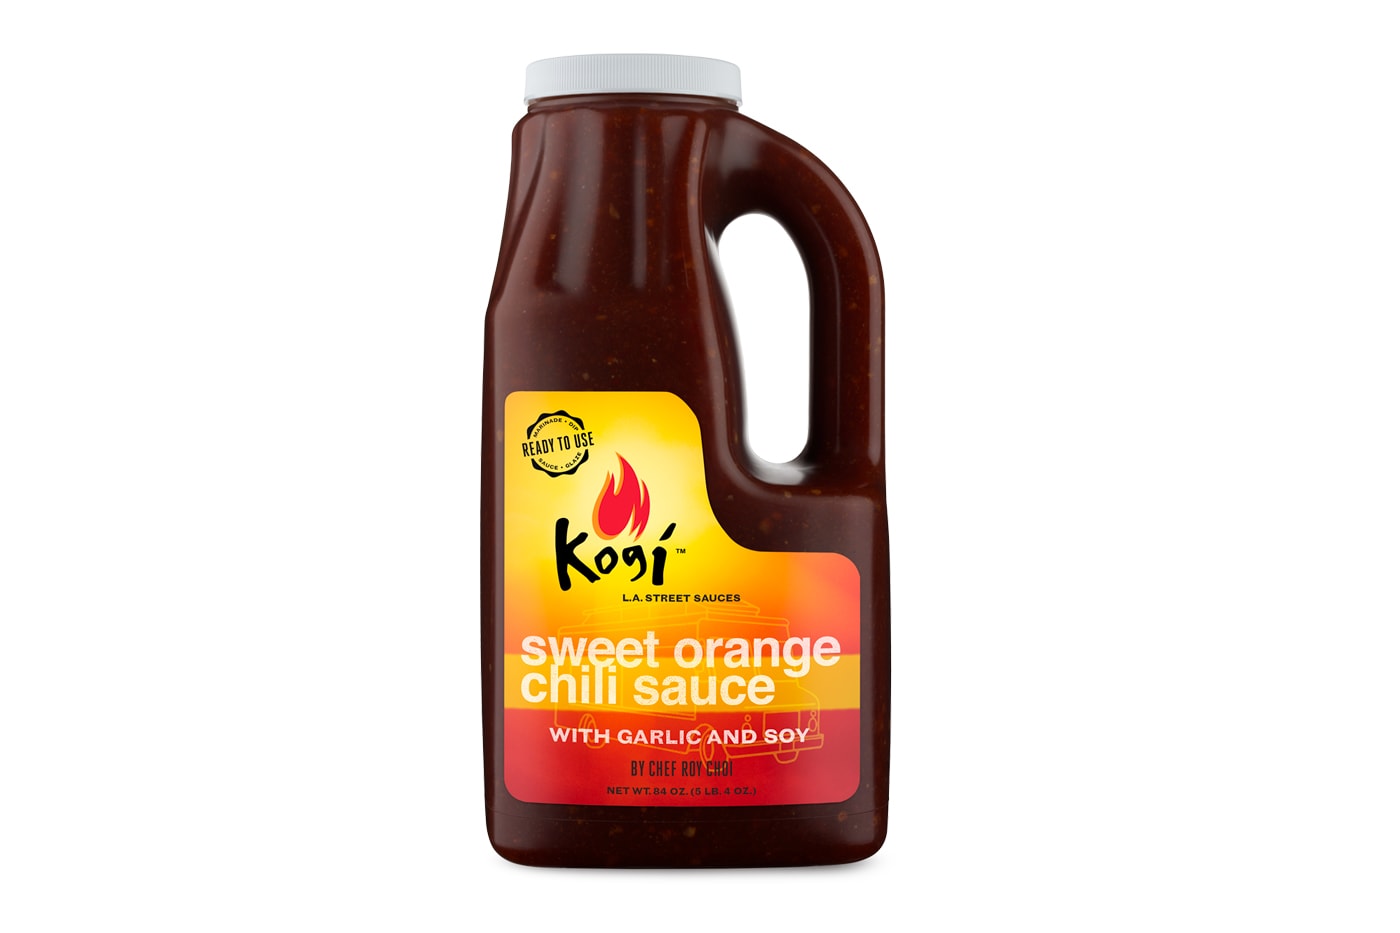 Kogi Korean BBQ L.A. Street Sauces Launch Buy Taste Review Roy Choi